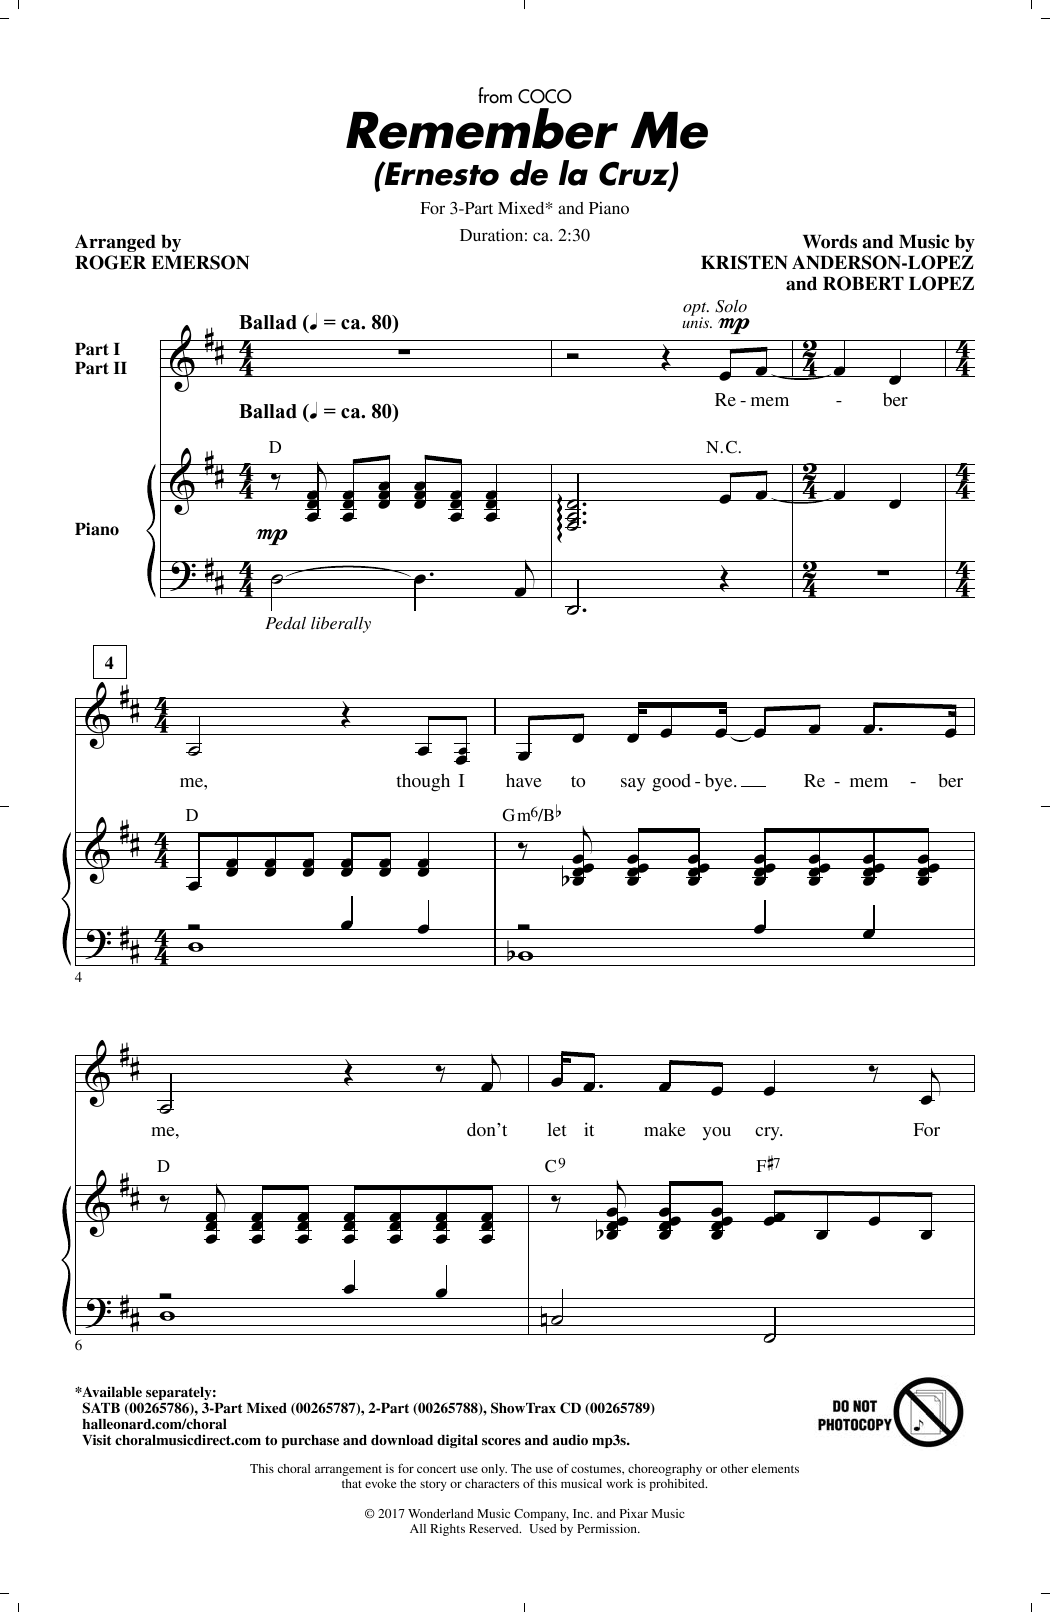 Kristen Anderson-Lopez & Robert Lopez Remember Me (Ernesto de la Cruz) (from Coco) (arr. Roger Emerson) Sheet Music Notes & Chords for 2-Part Choir - Download or Print PDF